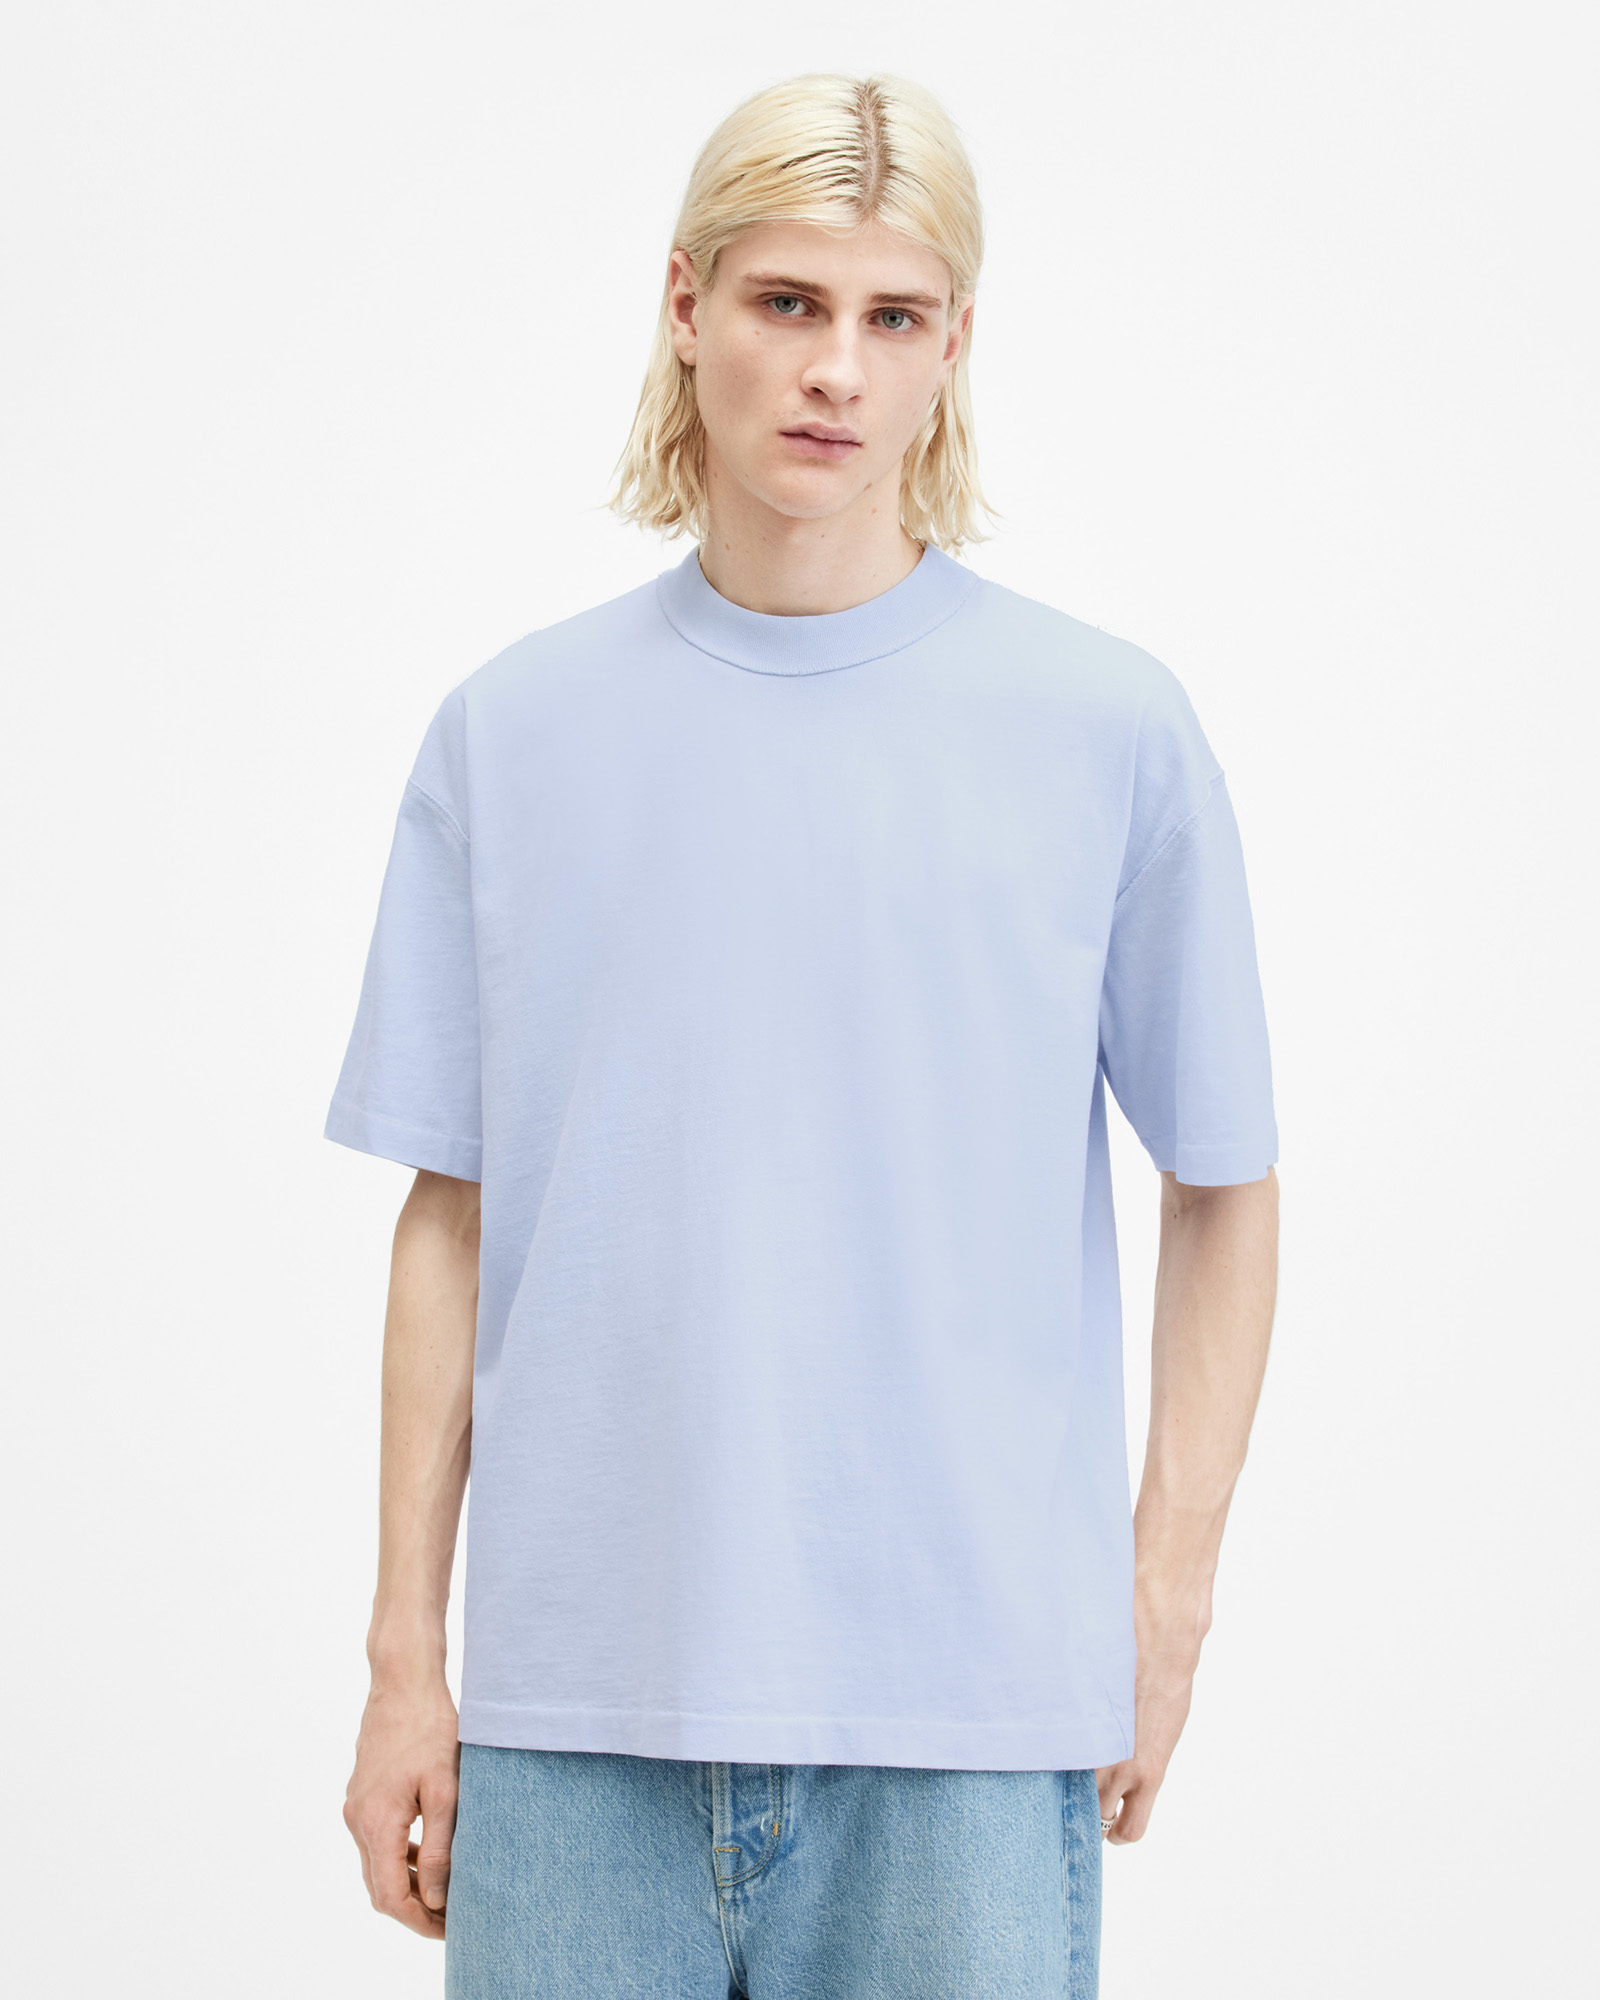 AllSaints Isac Oversized Crew Neck T-Shirt,, BETHEL BLUE